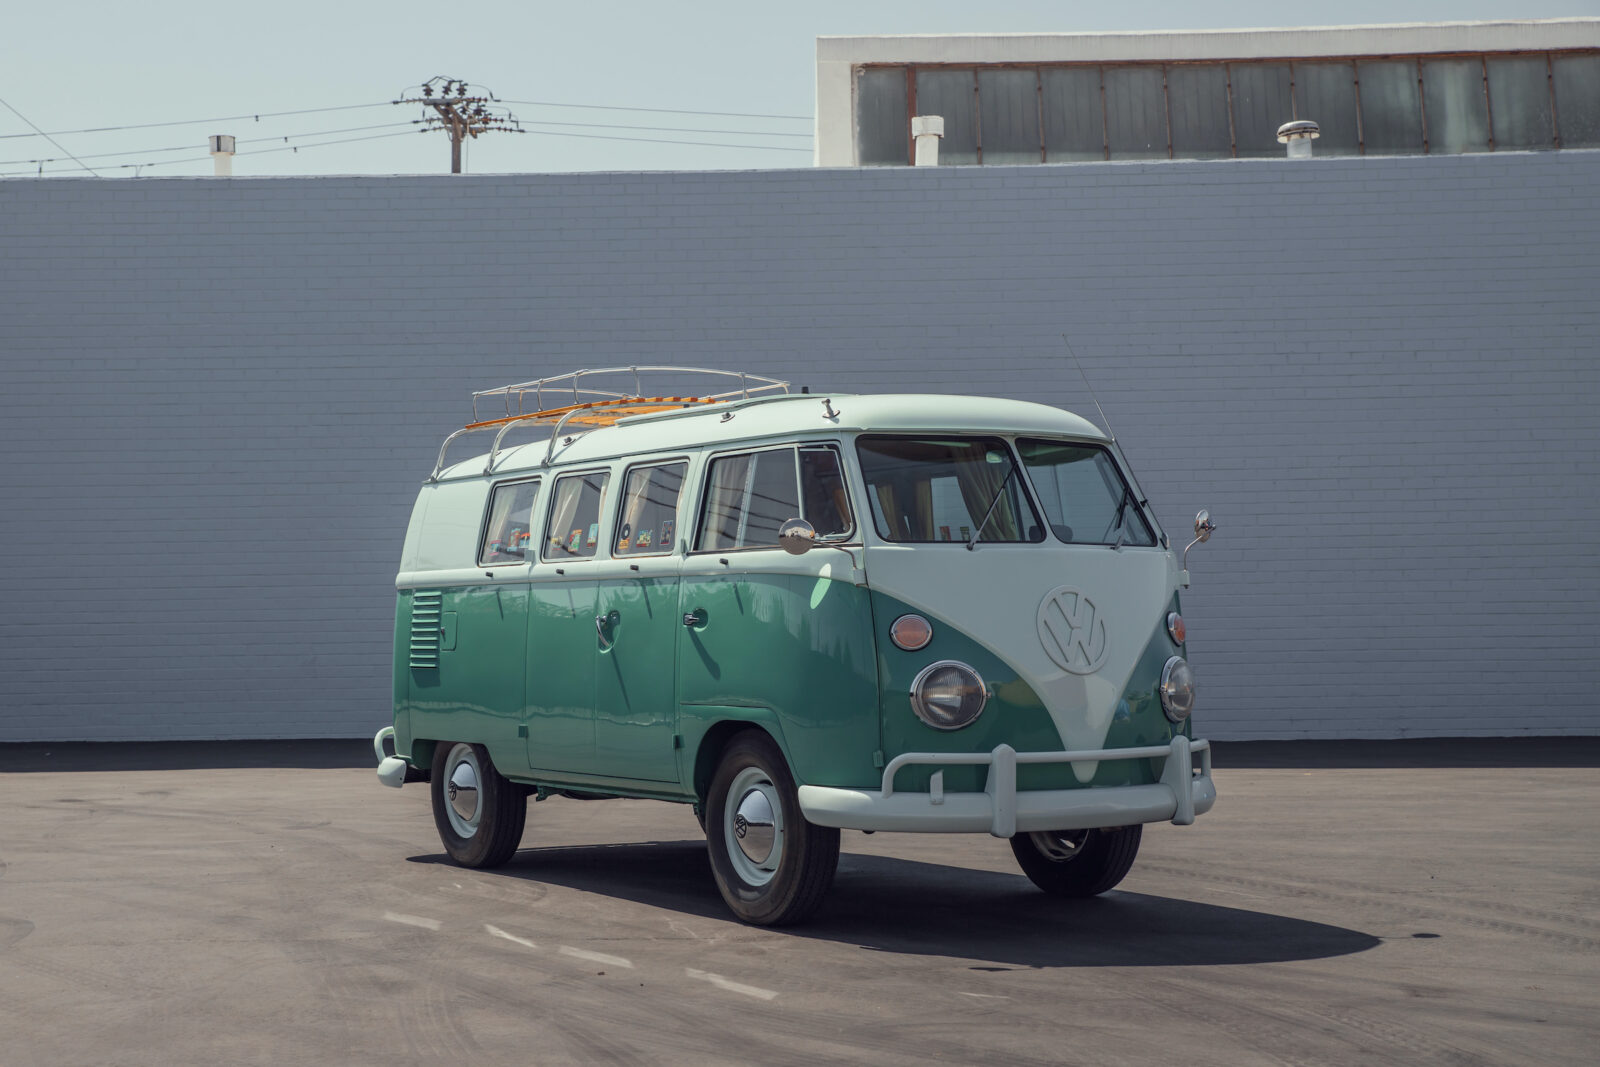 For Sale: A Restored Volkswagen Type 2 Westfalia Camper